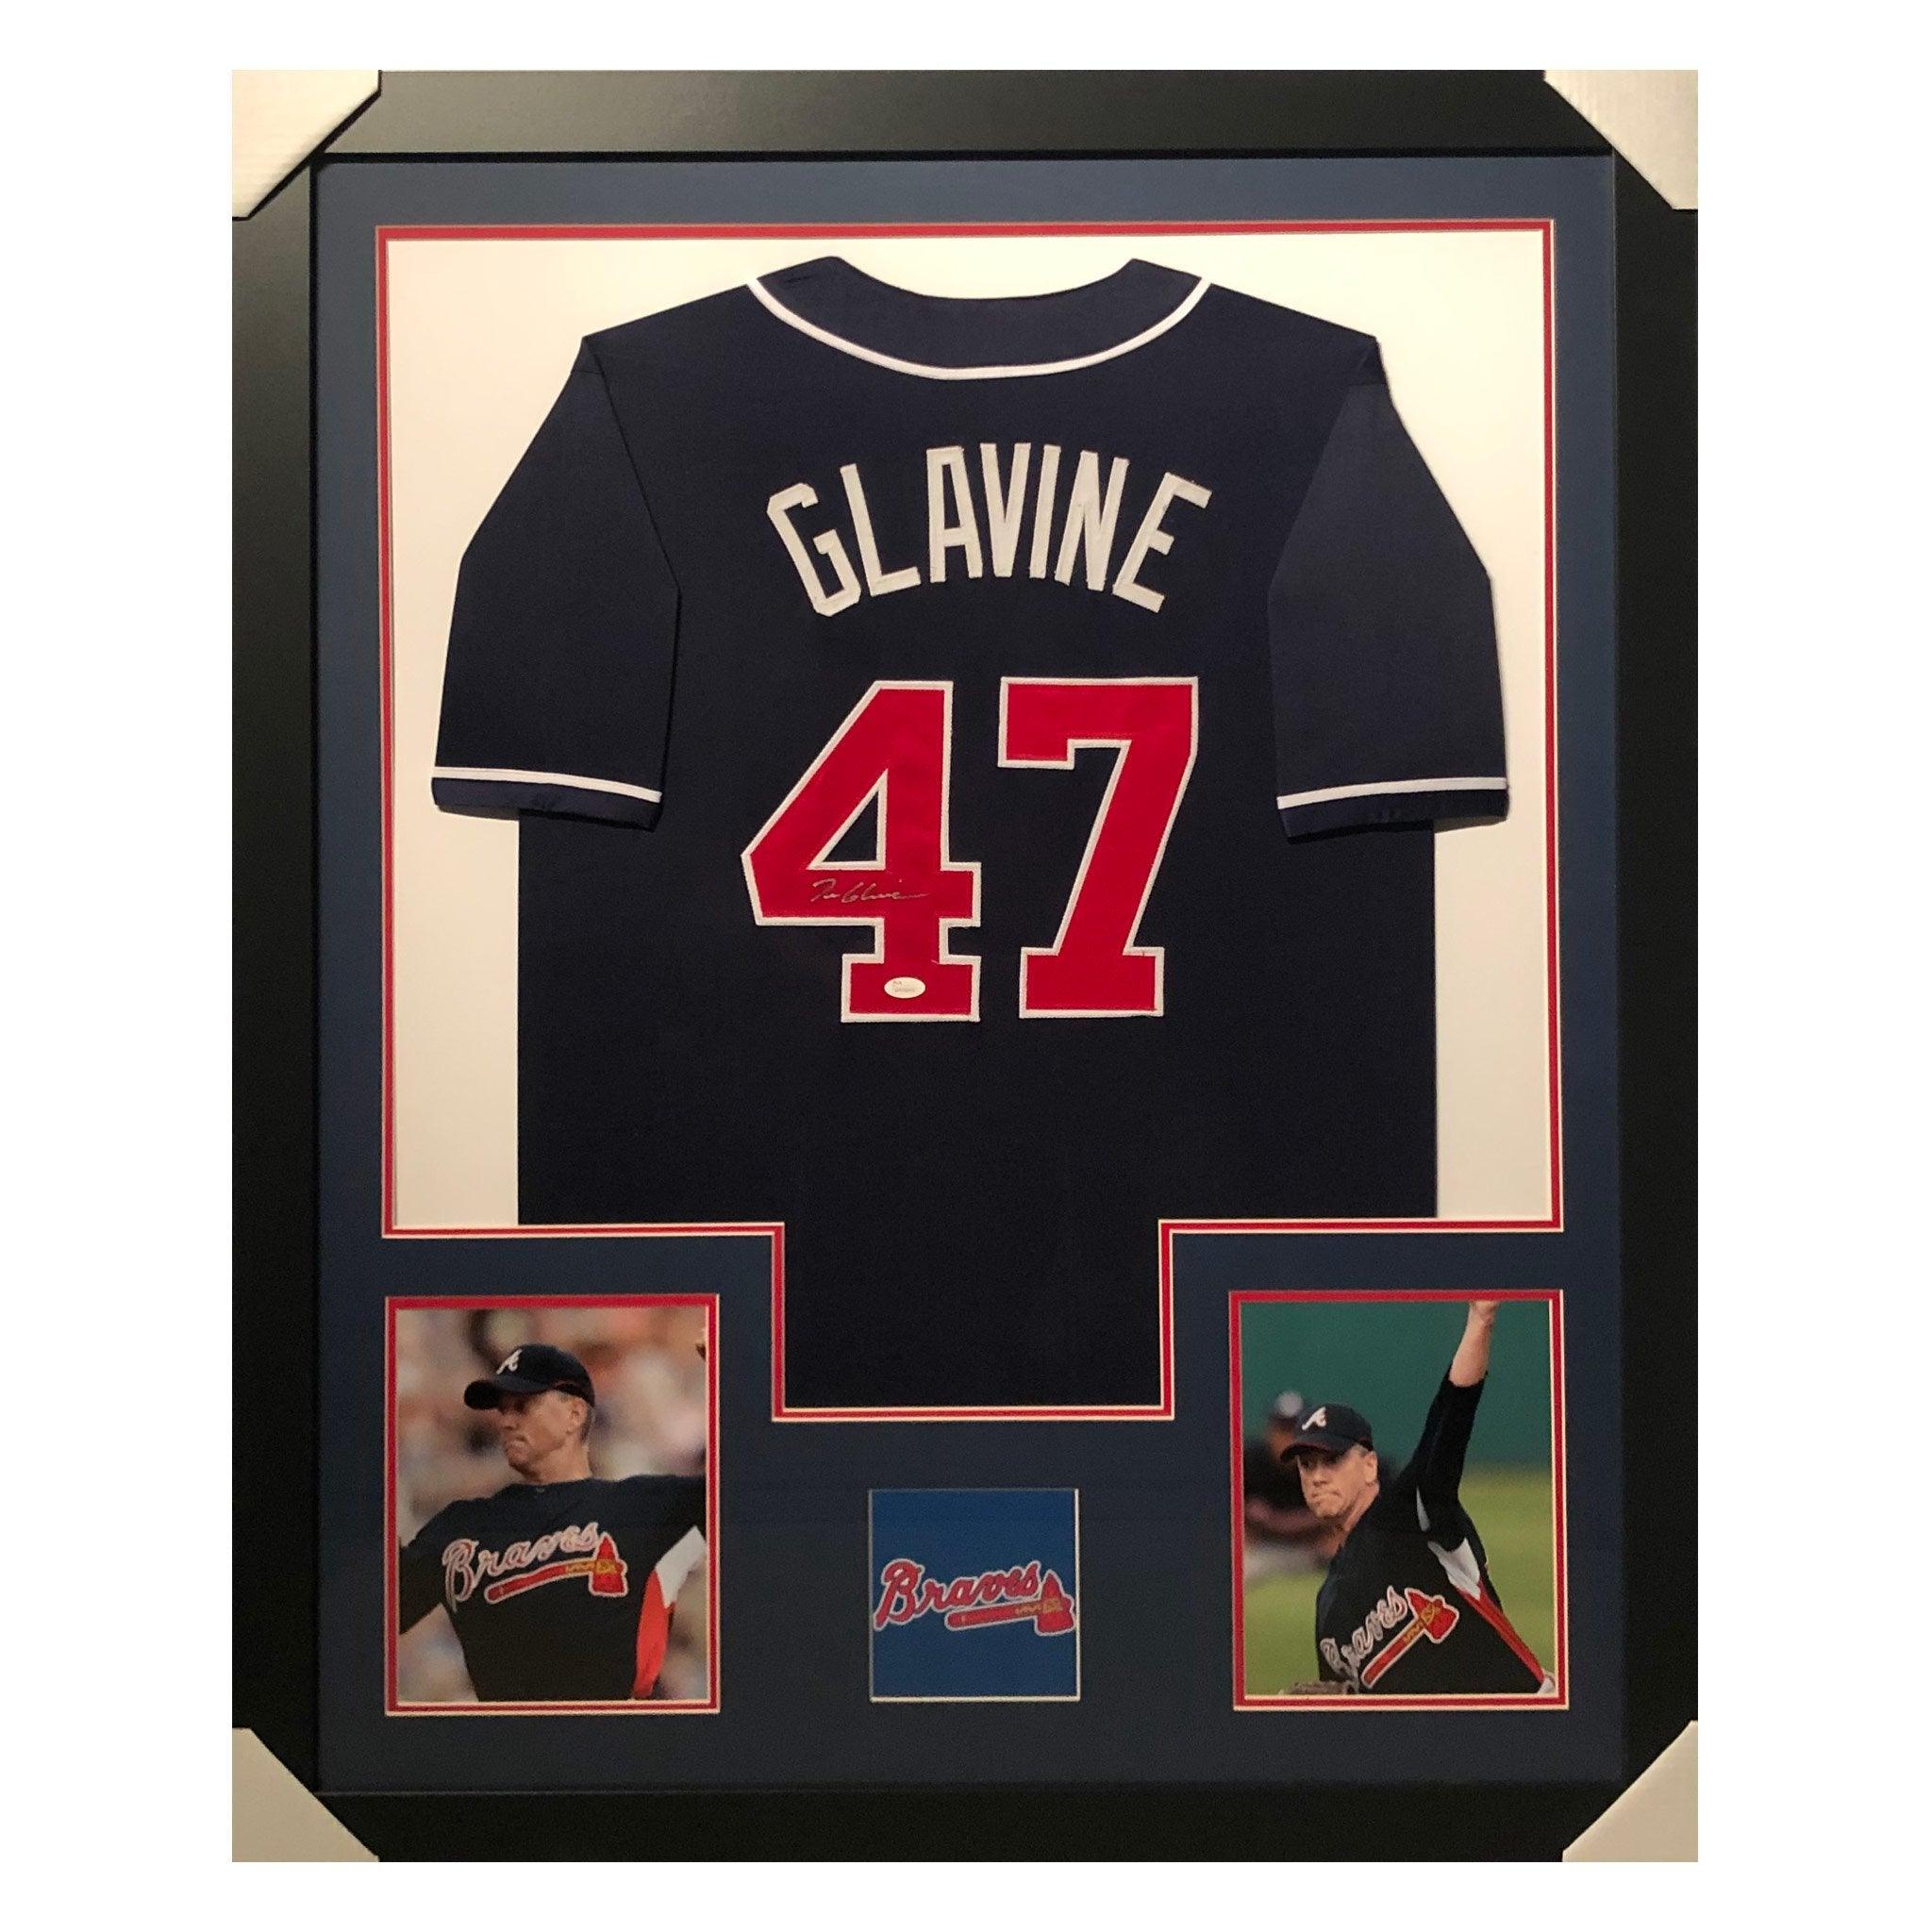 FRAMED Autographed/Signed TOM GLAVINE 33x42 Atlanta Blue Baseball